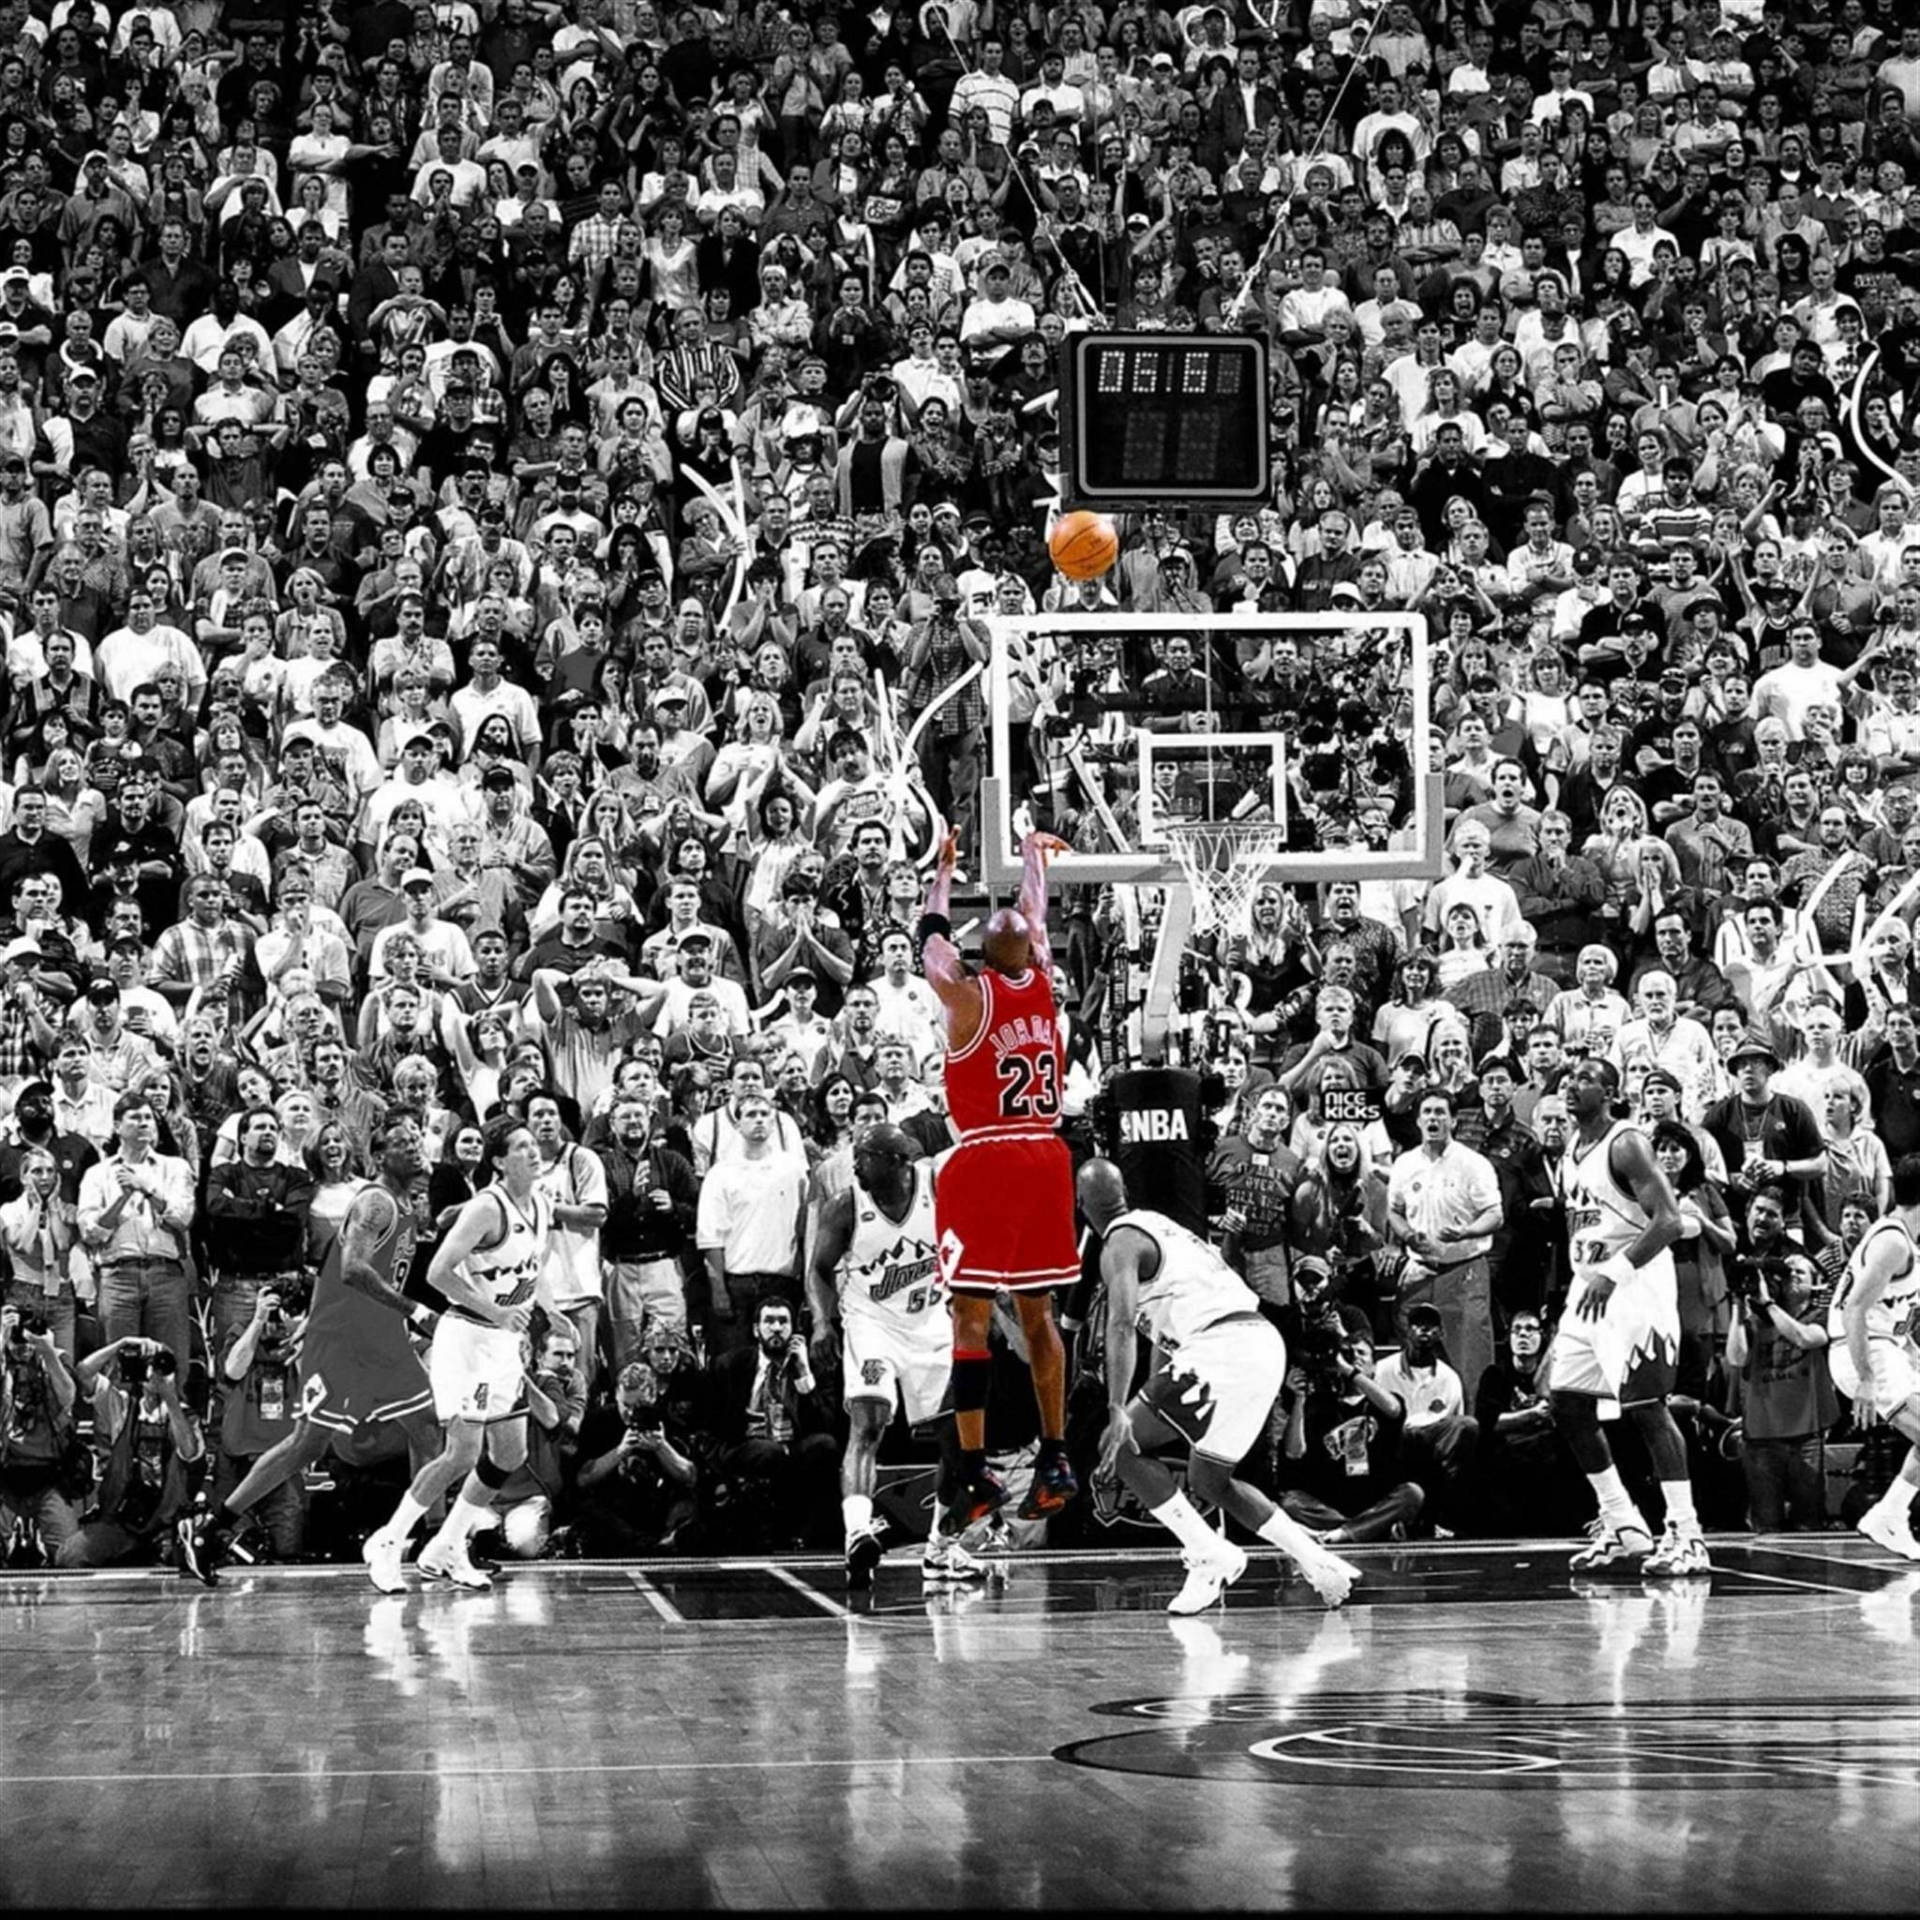 Cool Nba Michael Jordan Poster Background